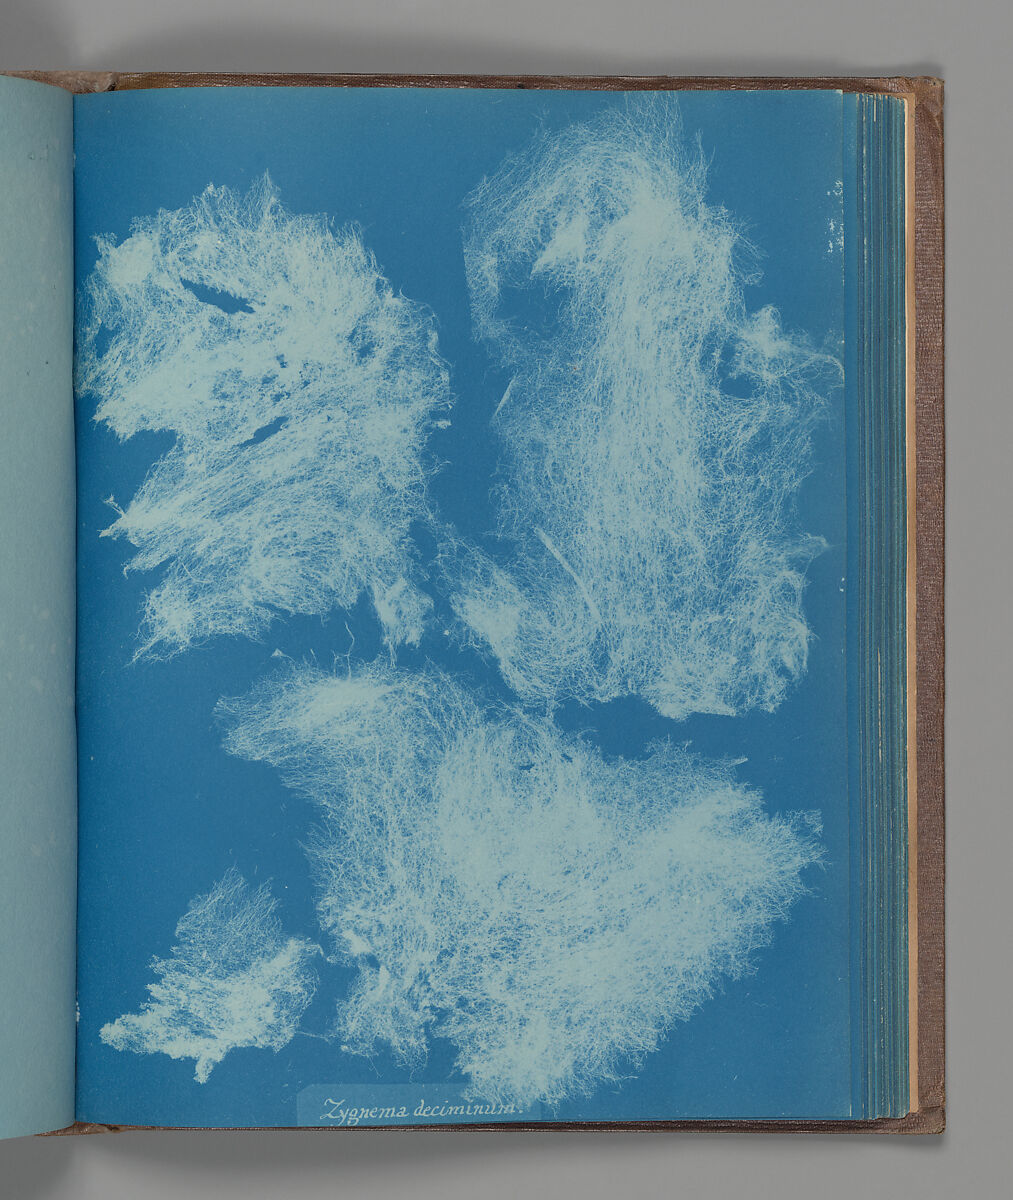 Zygnema deciminum, Anna Atkins (British, 1799–1871), Cyanotype 